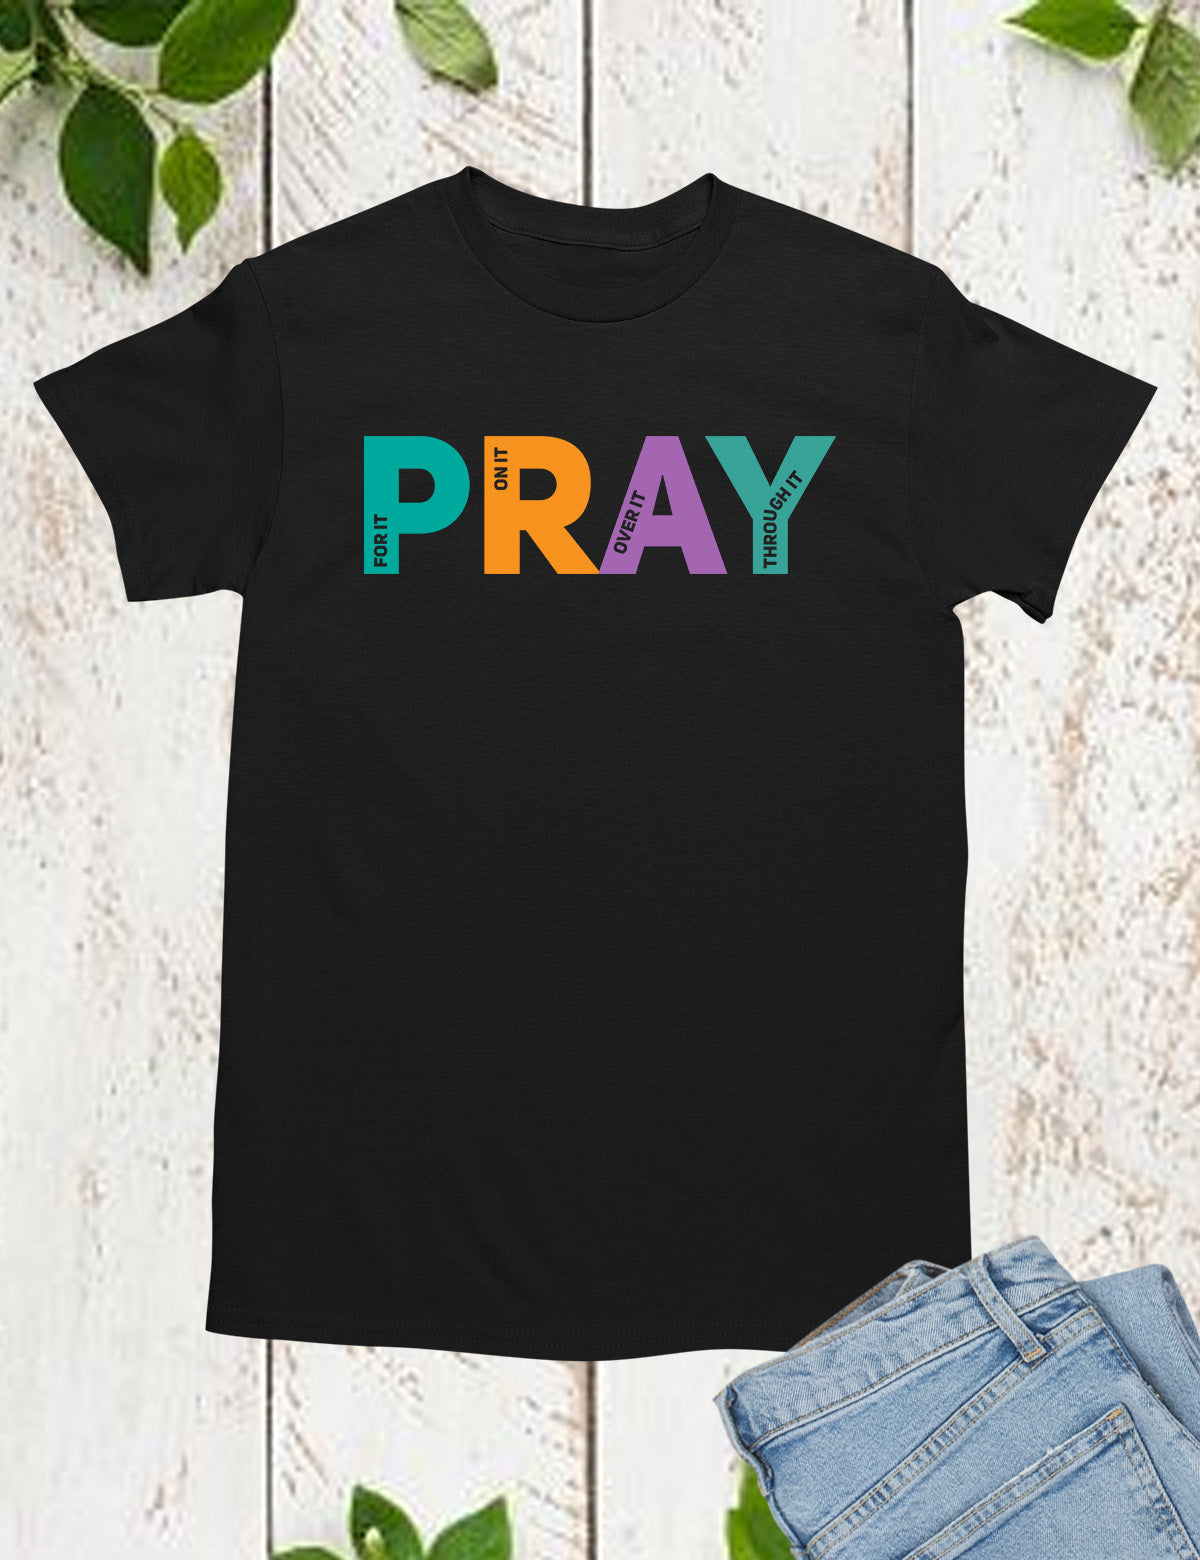 Pray on it Pray over it Pray Through it Shirt